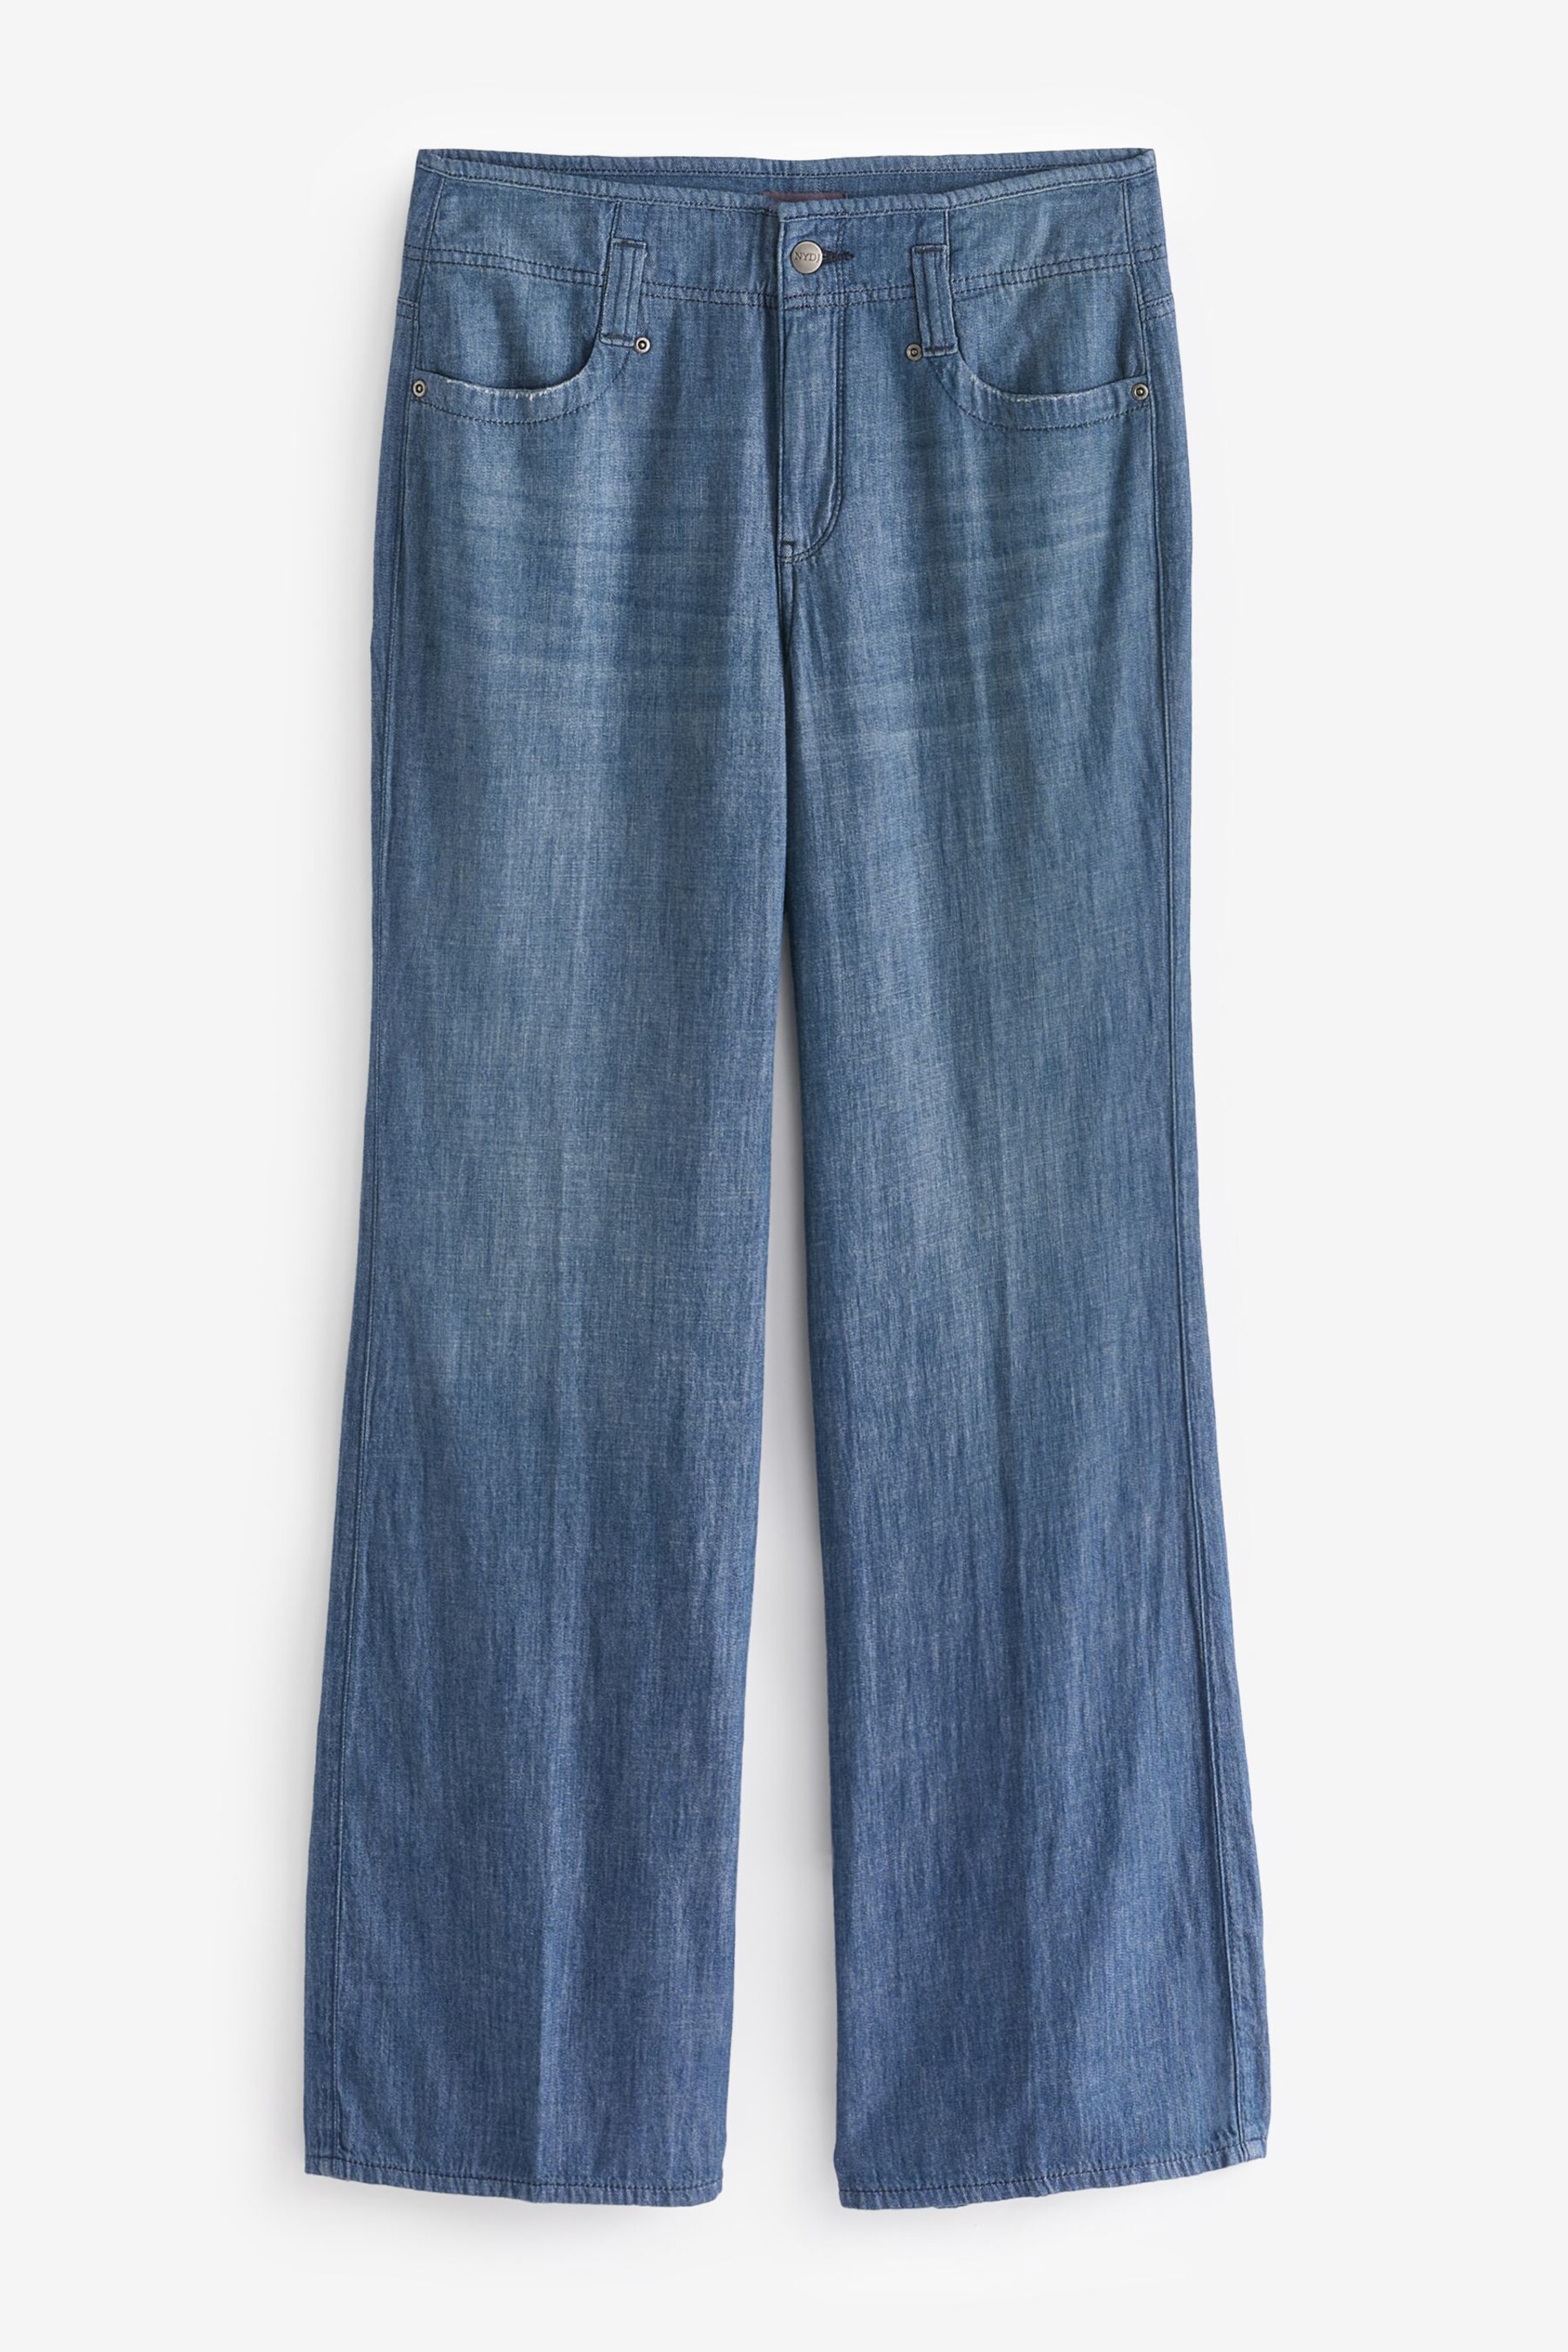 NYDJ Blue High Rise Teresa Wide Leg Jeans - Image 7 of 7